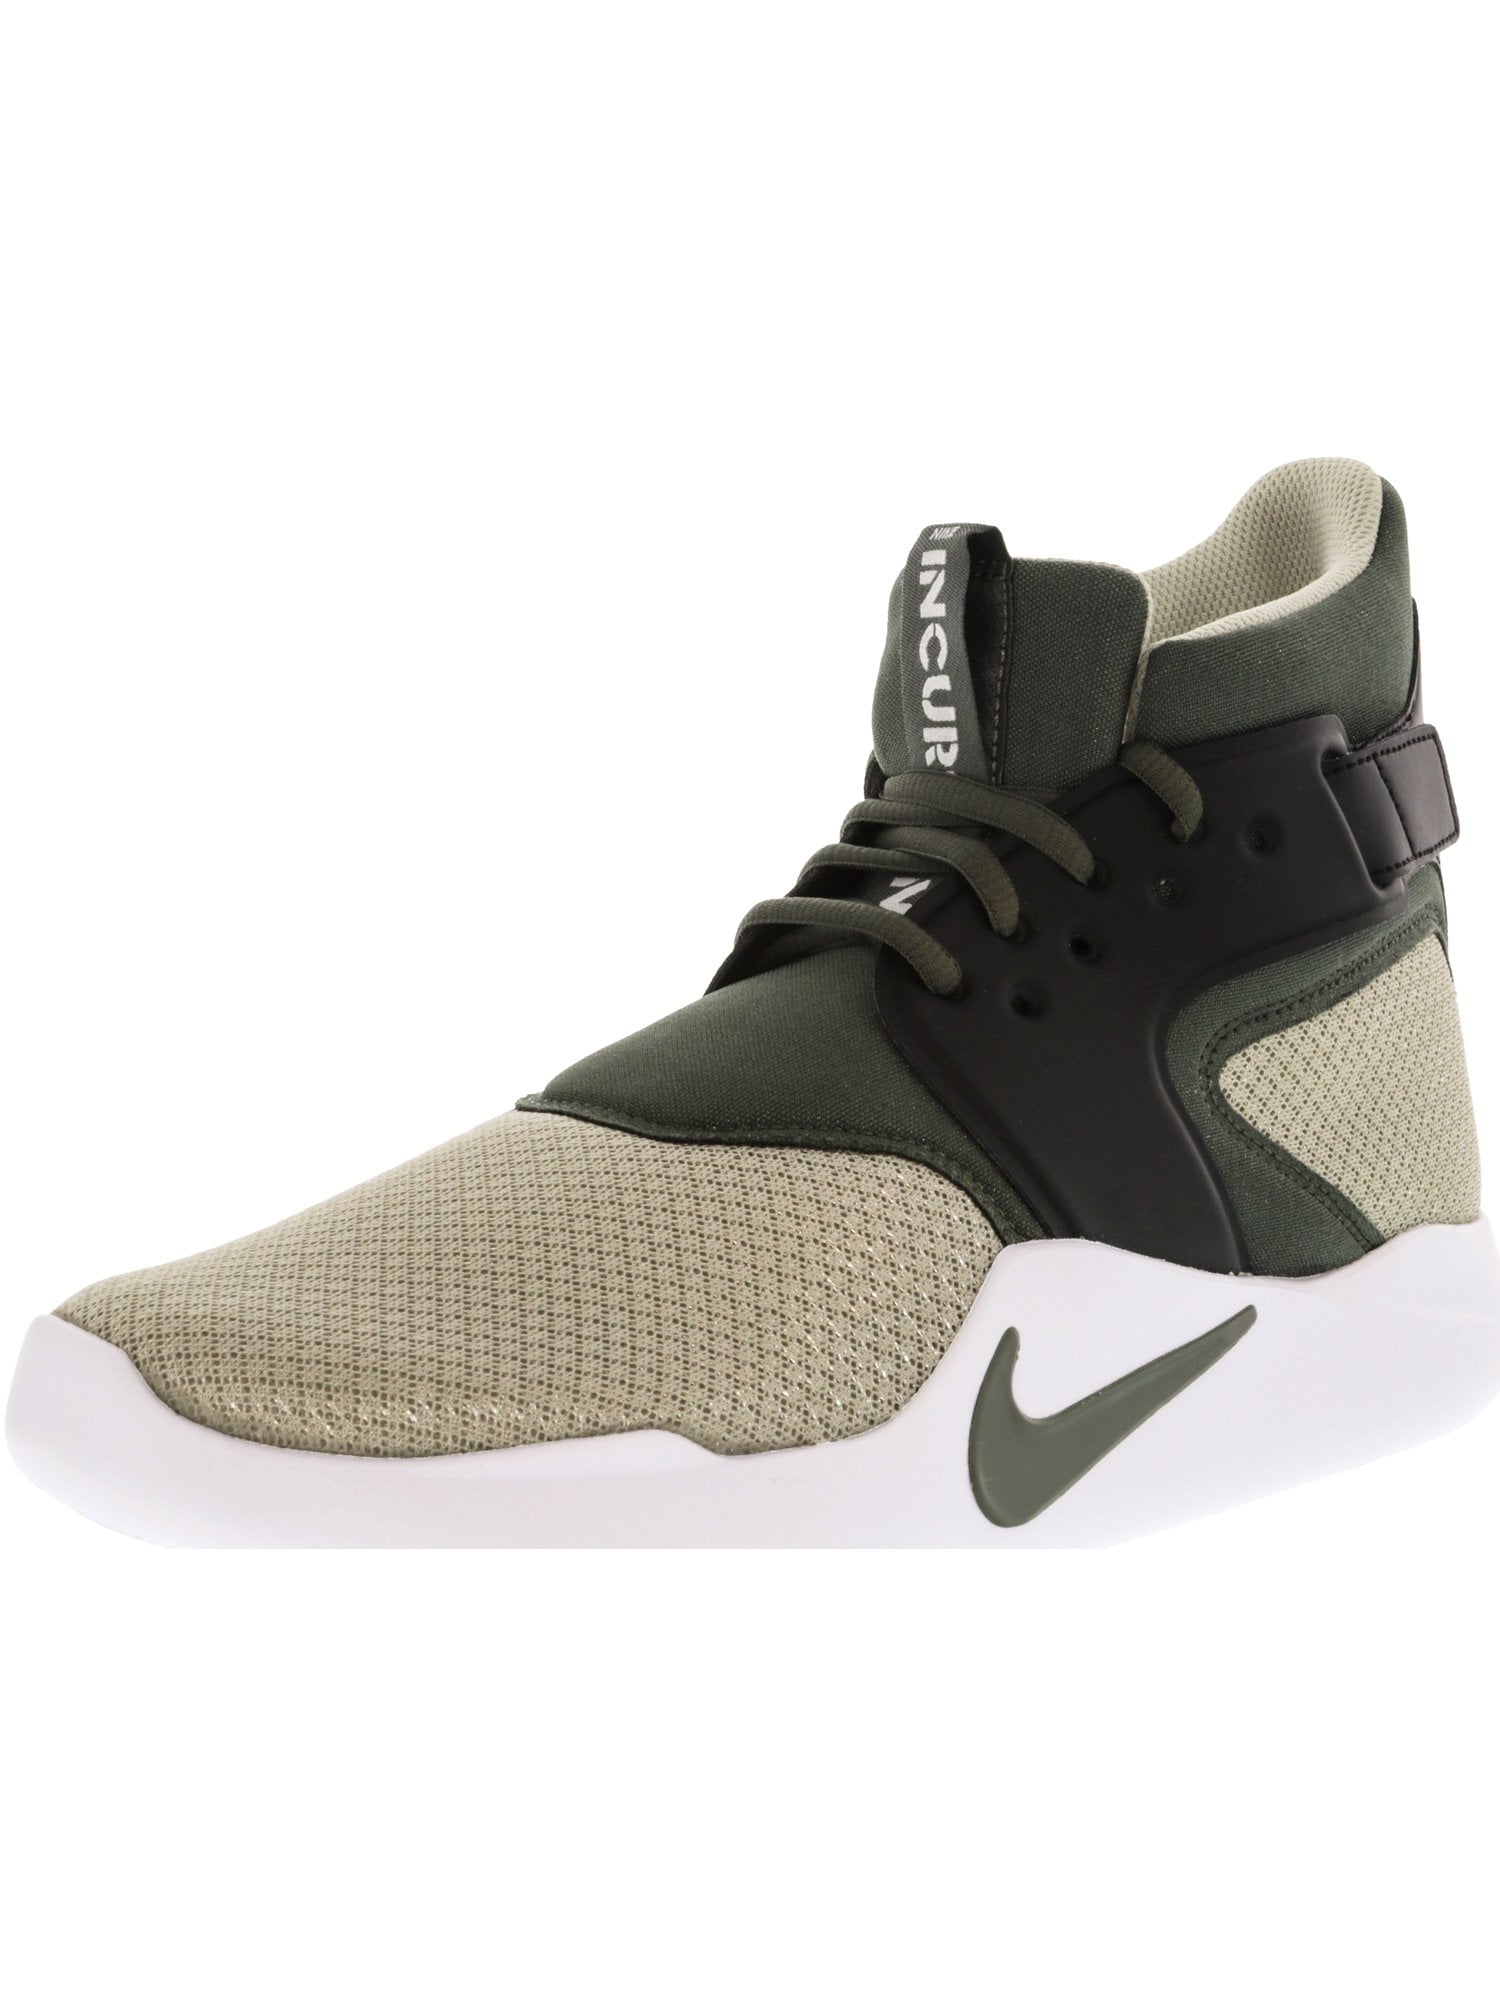 Nike | Shoes | Nike Incursion Dark Green White Black Mens Size 85 | Poshmark